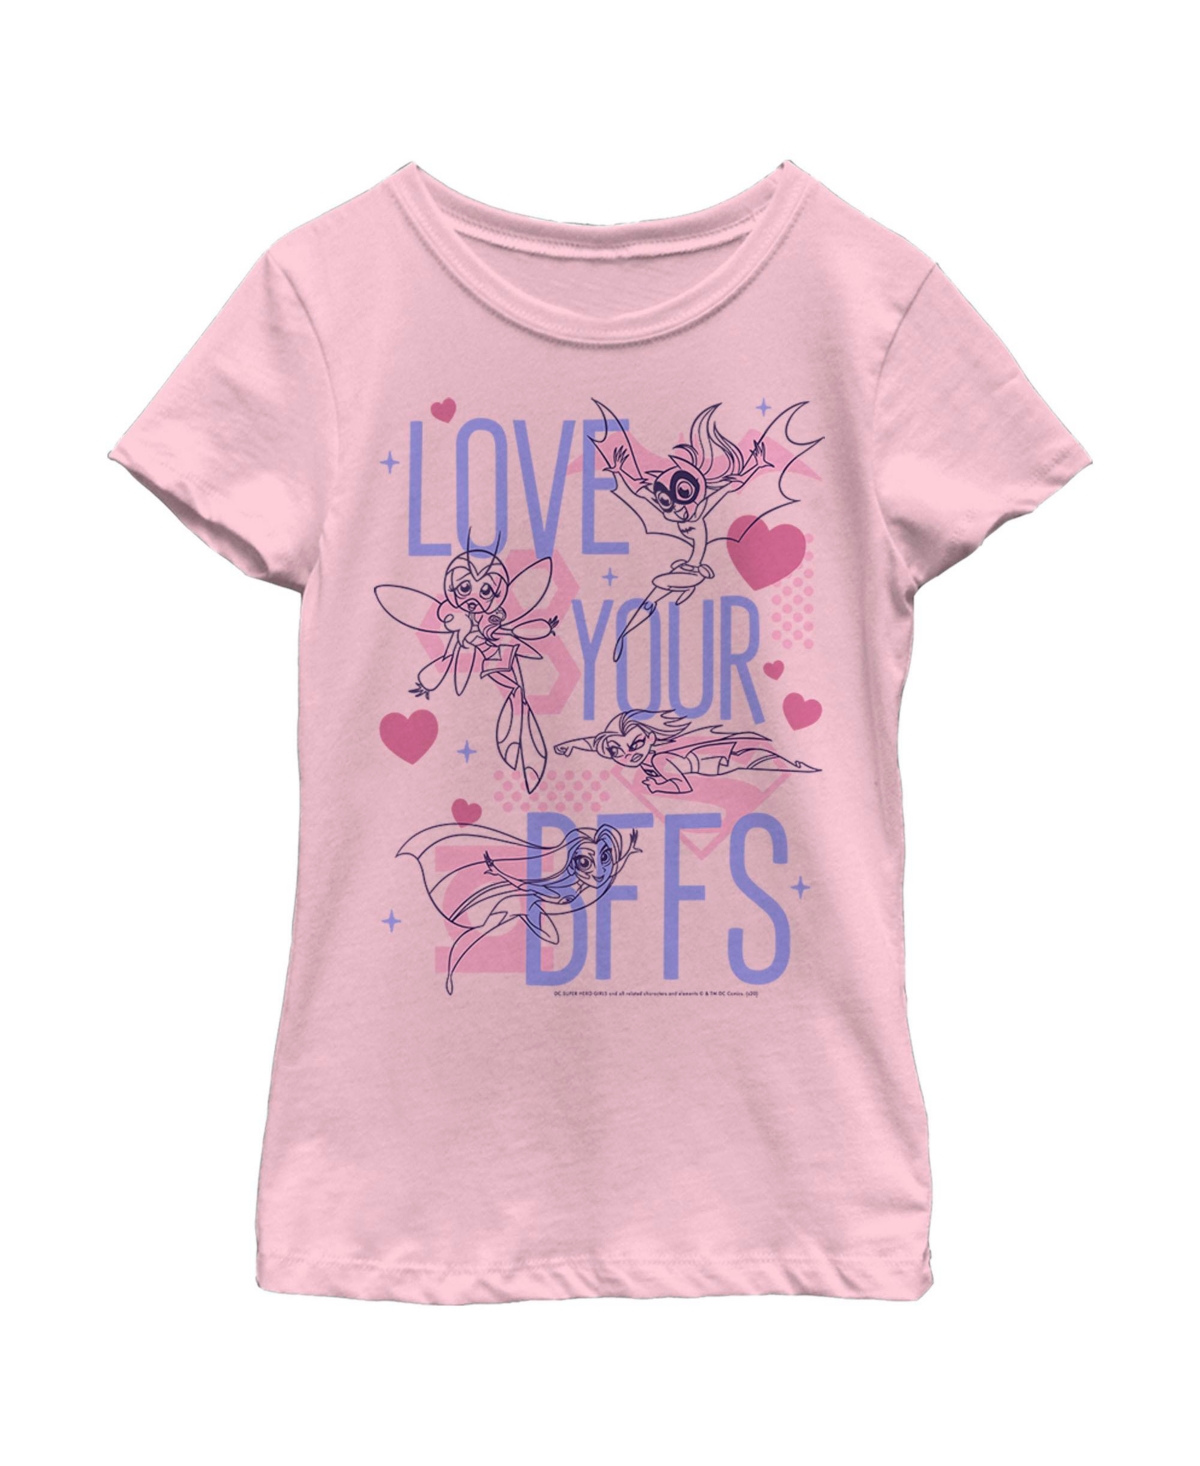 Dc Comics Girl's Batman Valentine's Day Love Your Bffs Child T-shirt In Light Pink